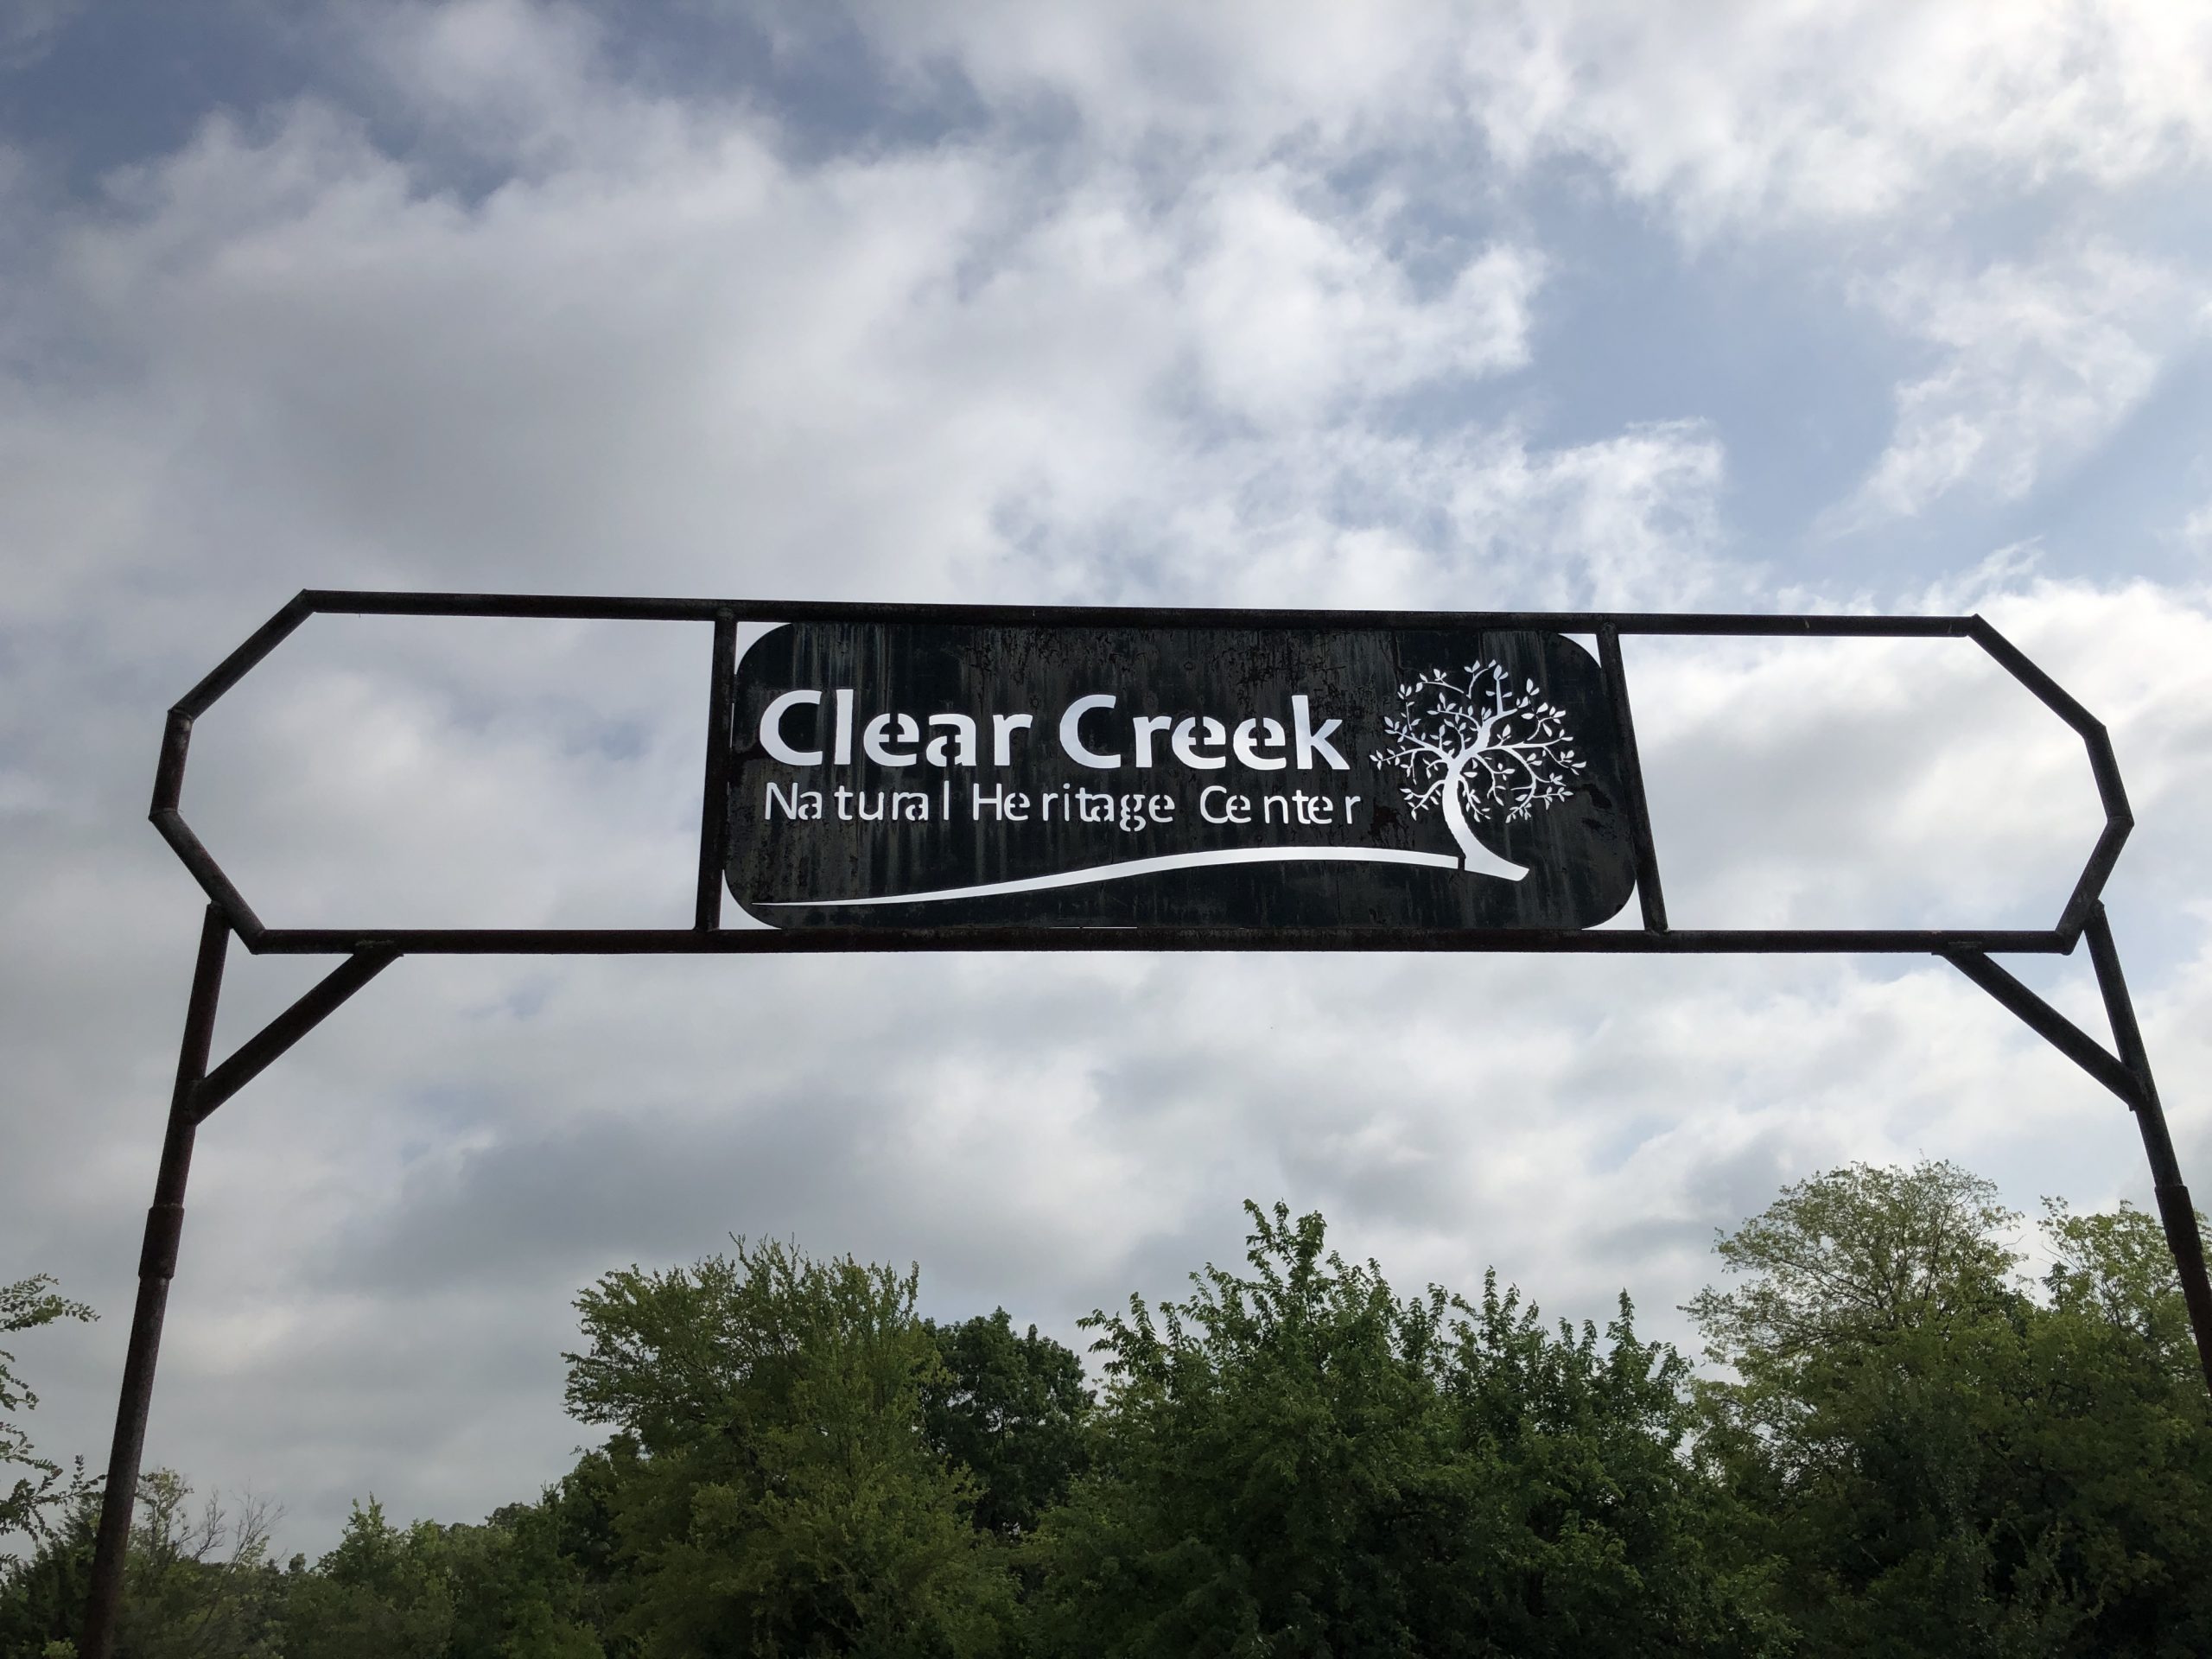 Clear creek natural heritage center entrance sign